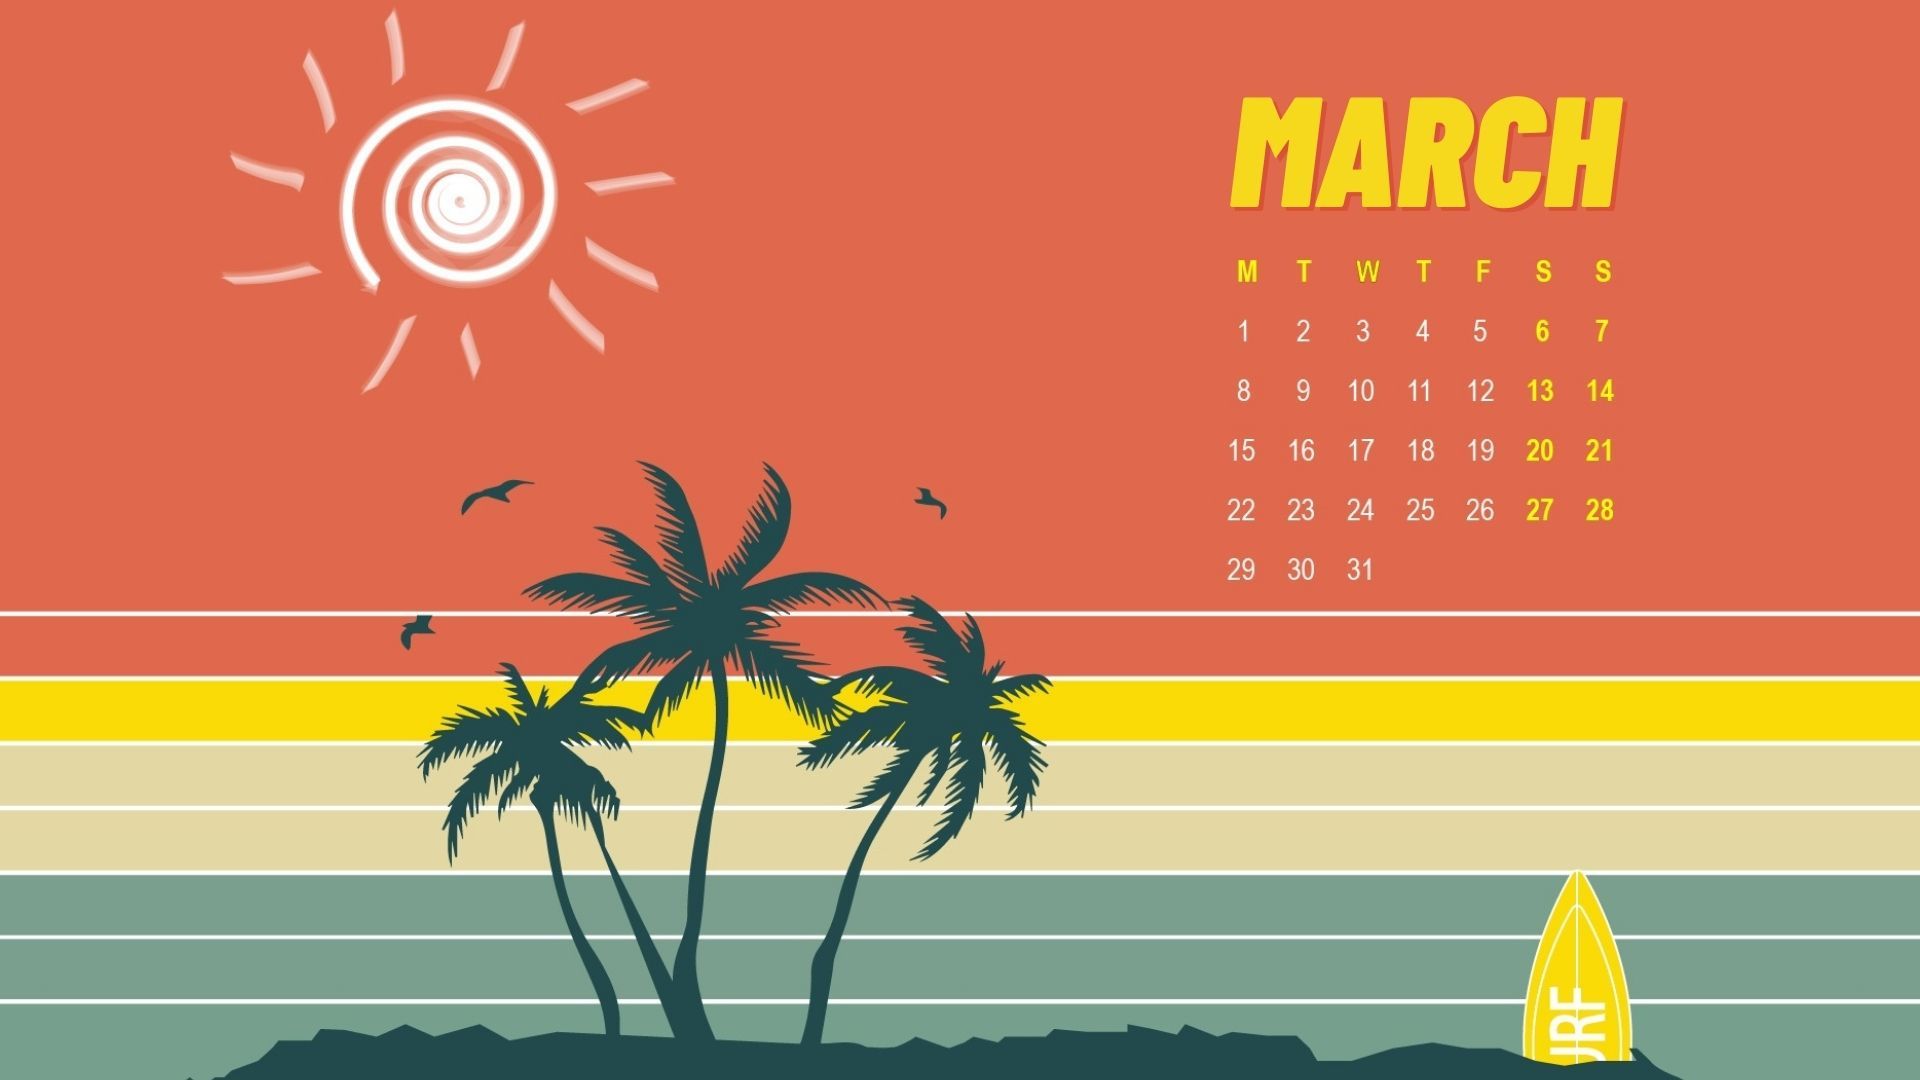 March 2021 Calendar HD Wallpaper Free Download